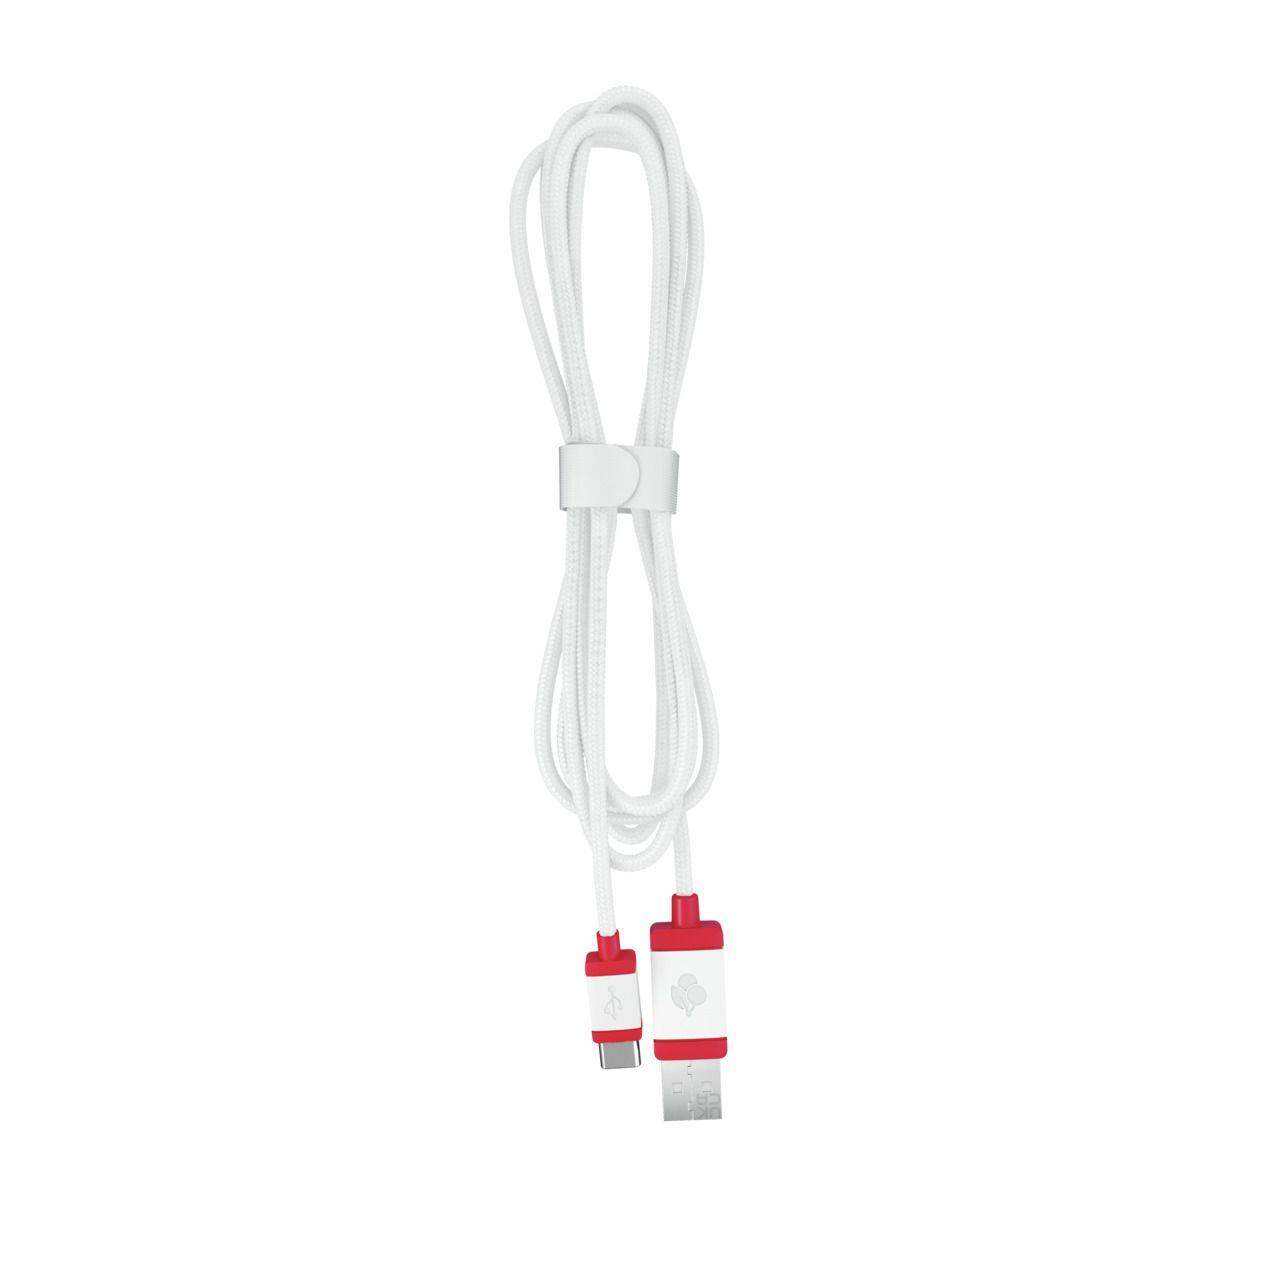 CHERRY USB Kabel 1.5 - Hochwertiges USB-C auf USB-A Kabel